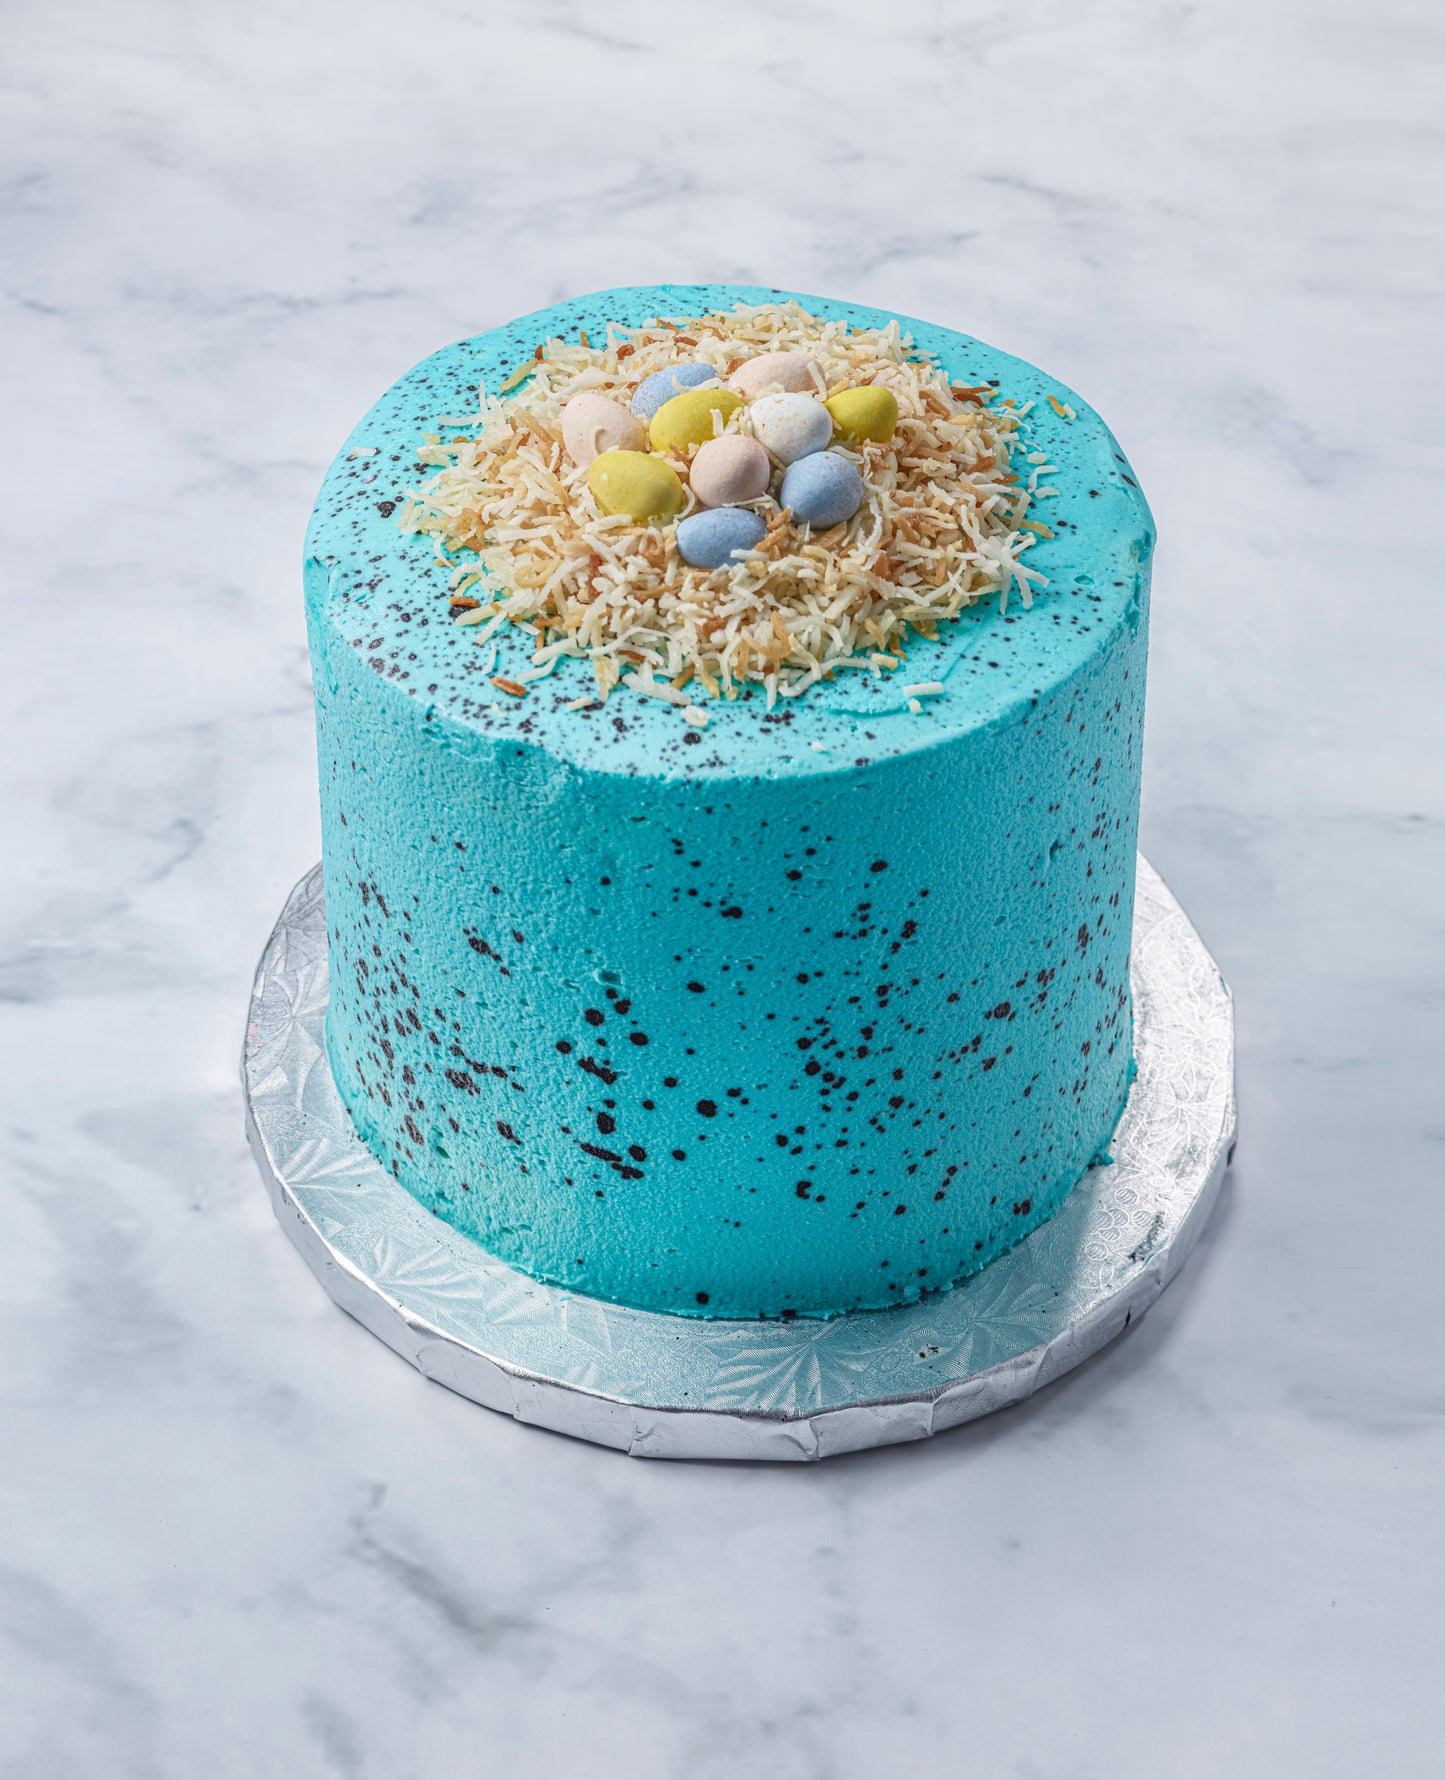 Robin's egg blue speckled cake